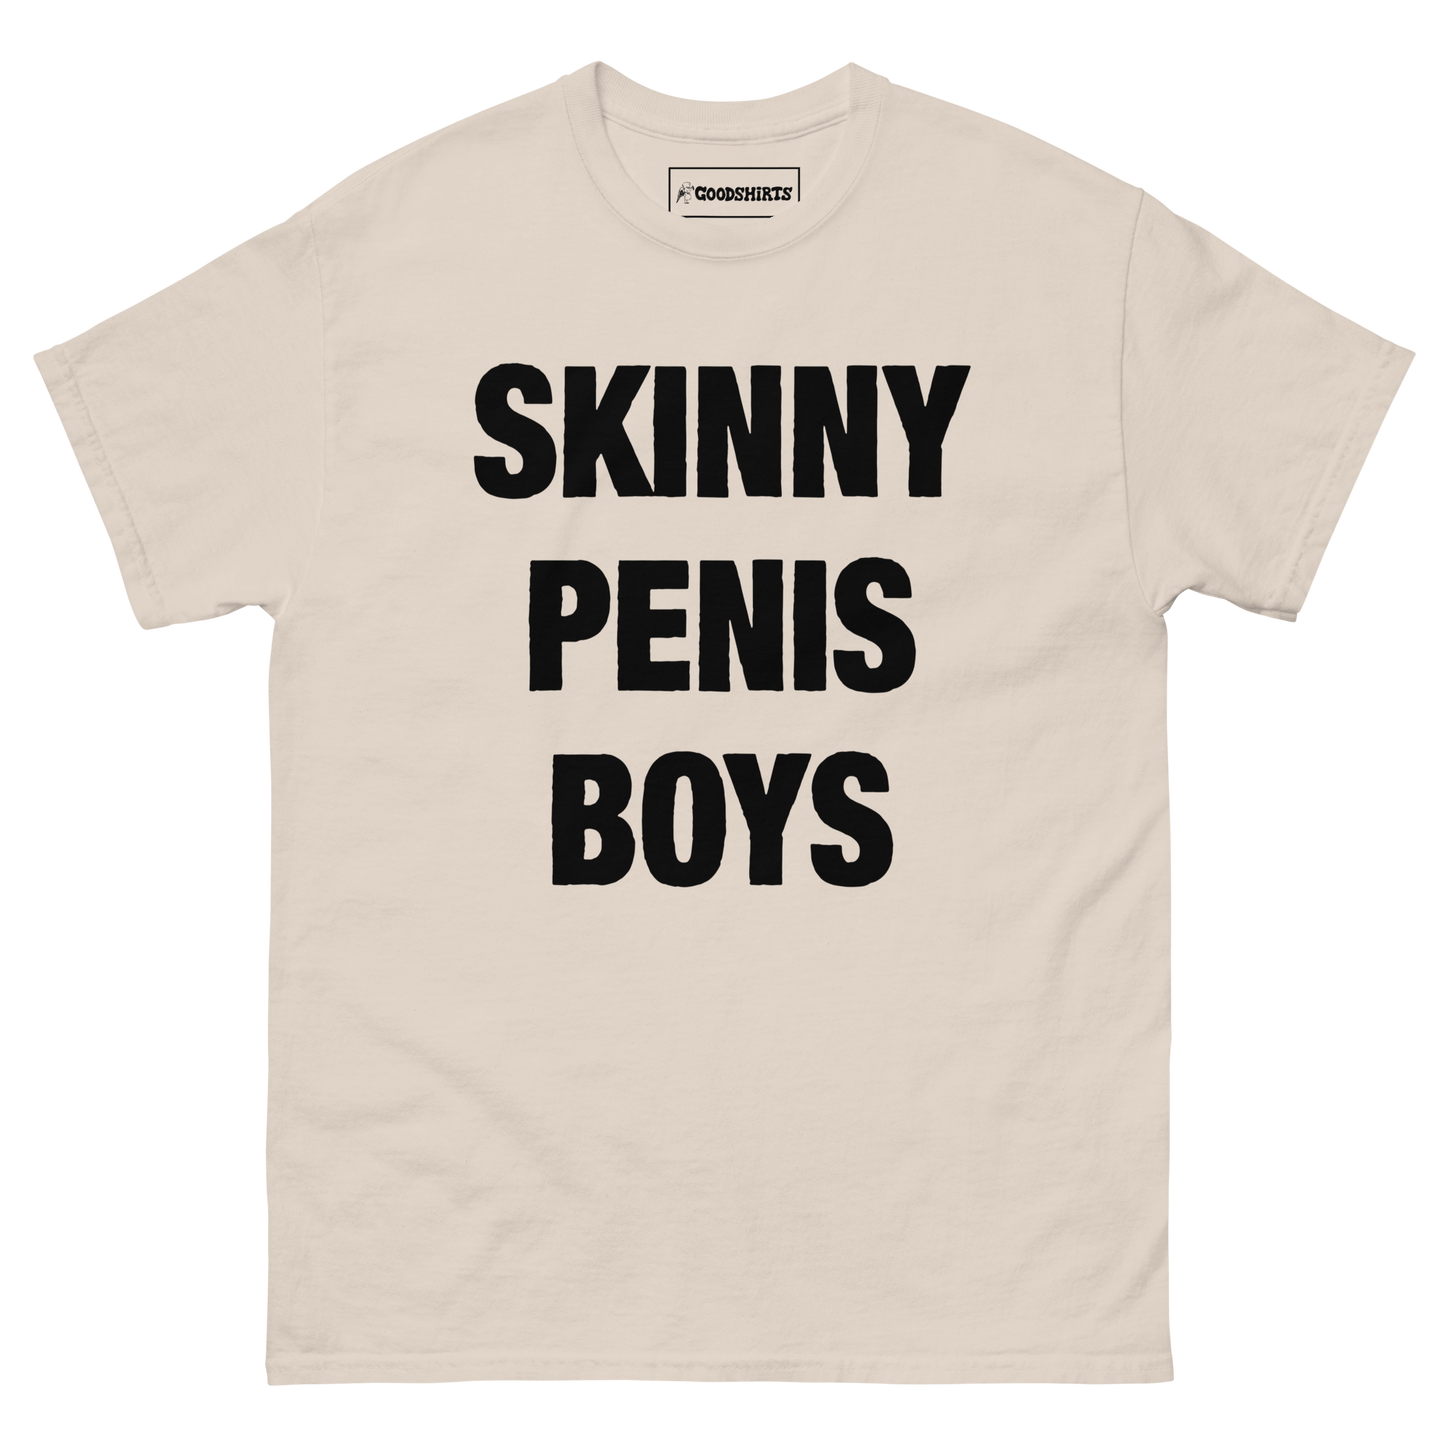 Skinny Penis Boys.